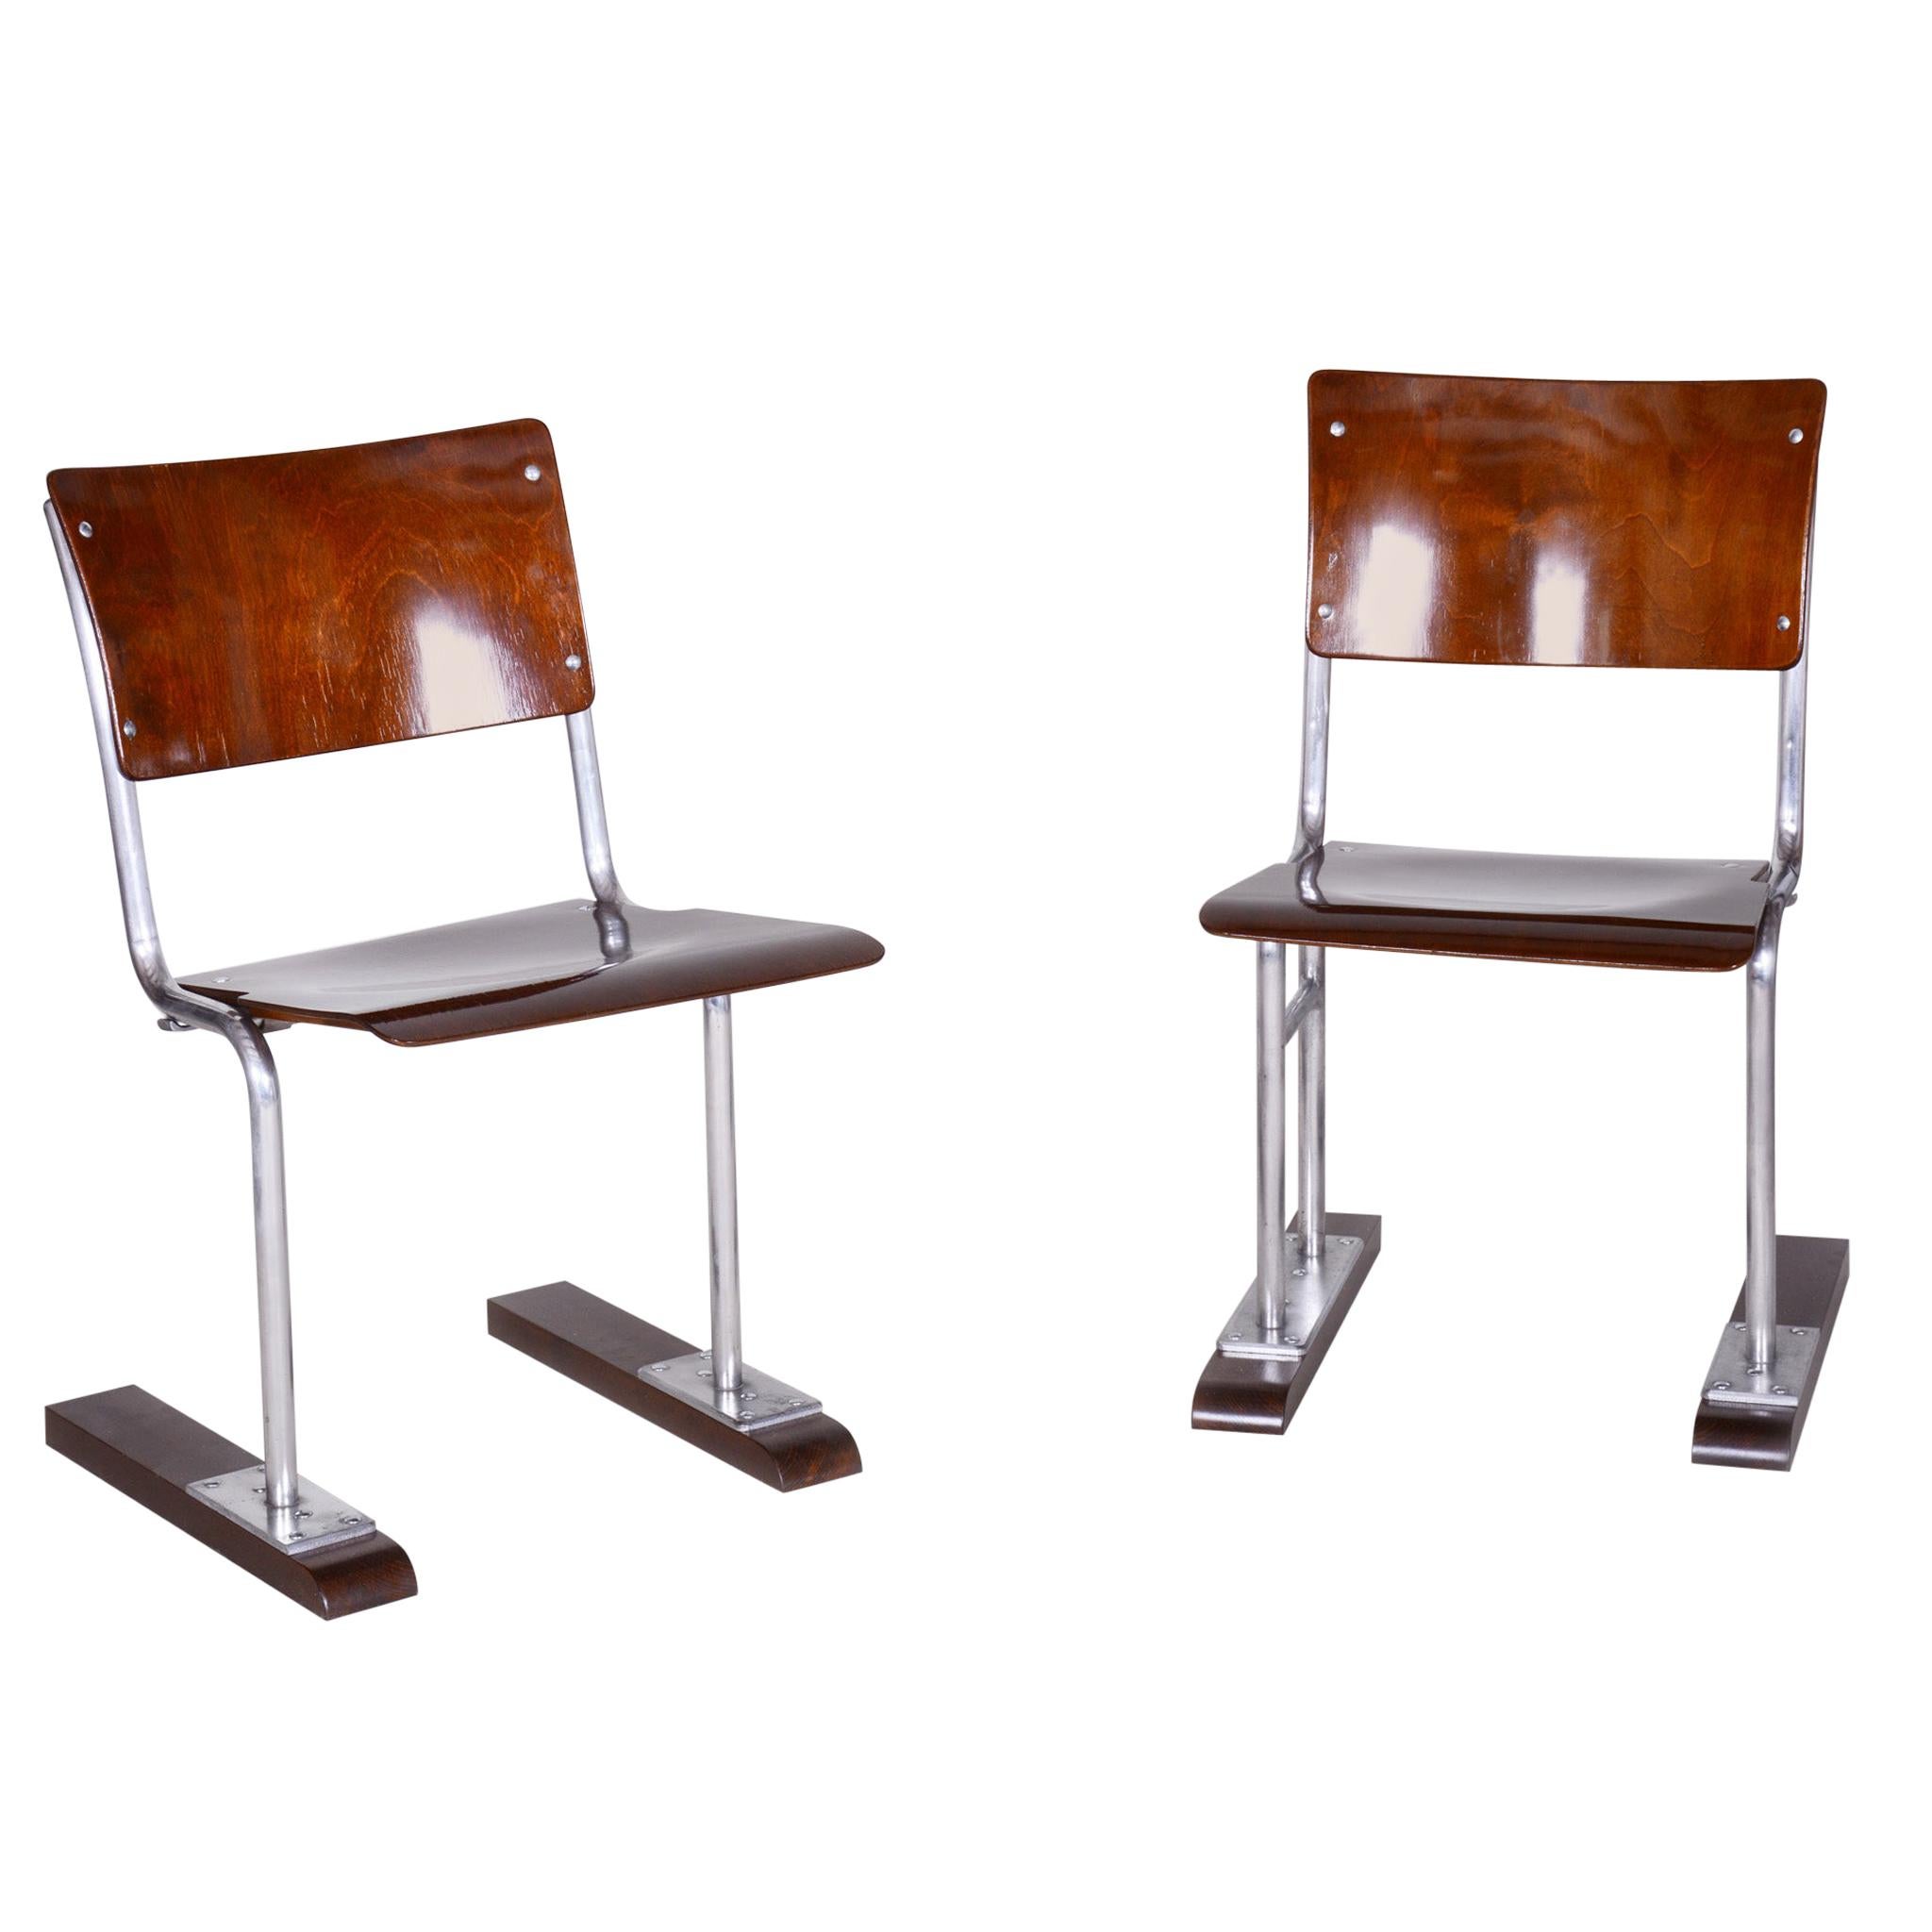 Pair of Unusual Restored Beech Bauhaus Folding Chairs, Chrome, Germany, 1920s